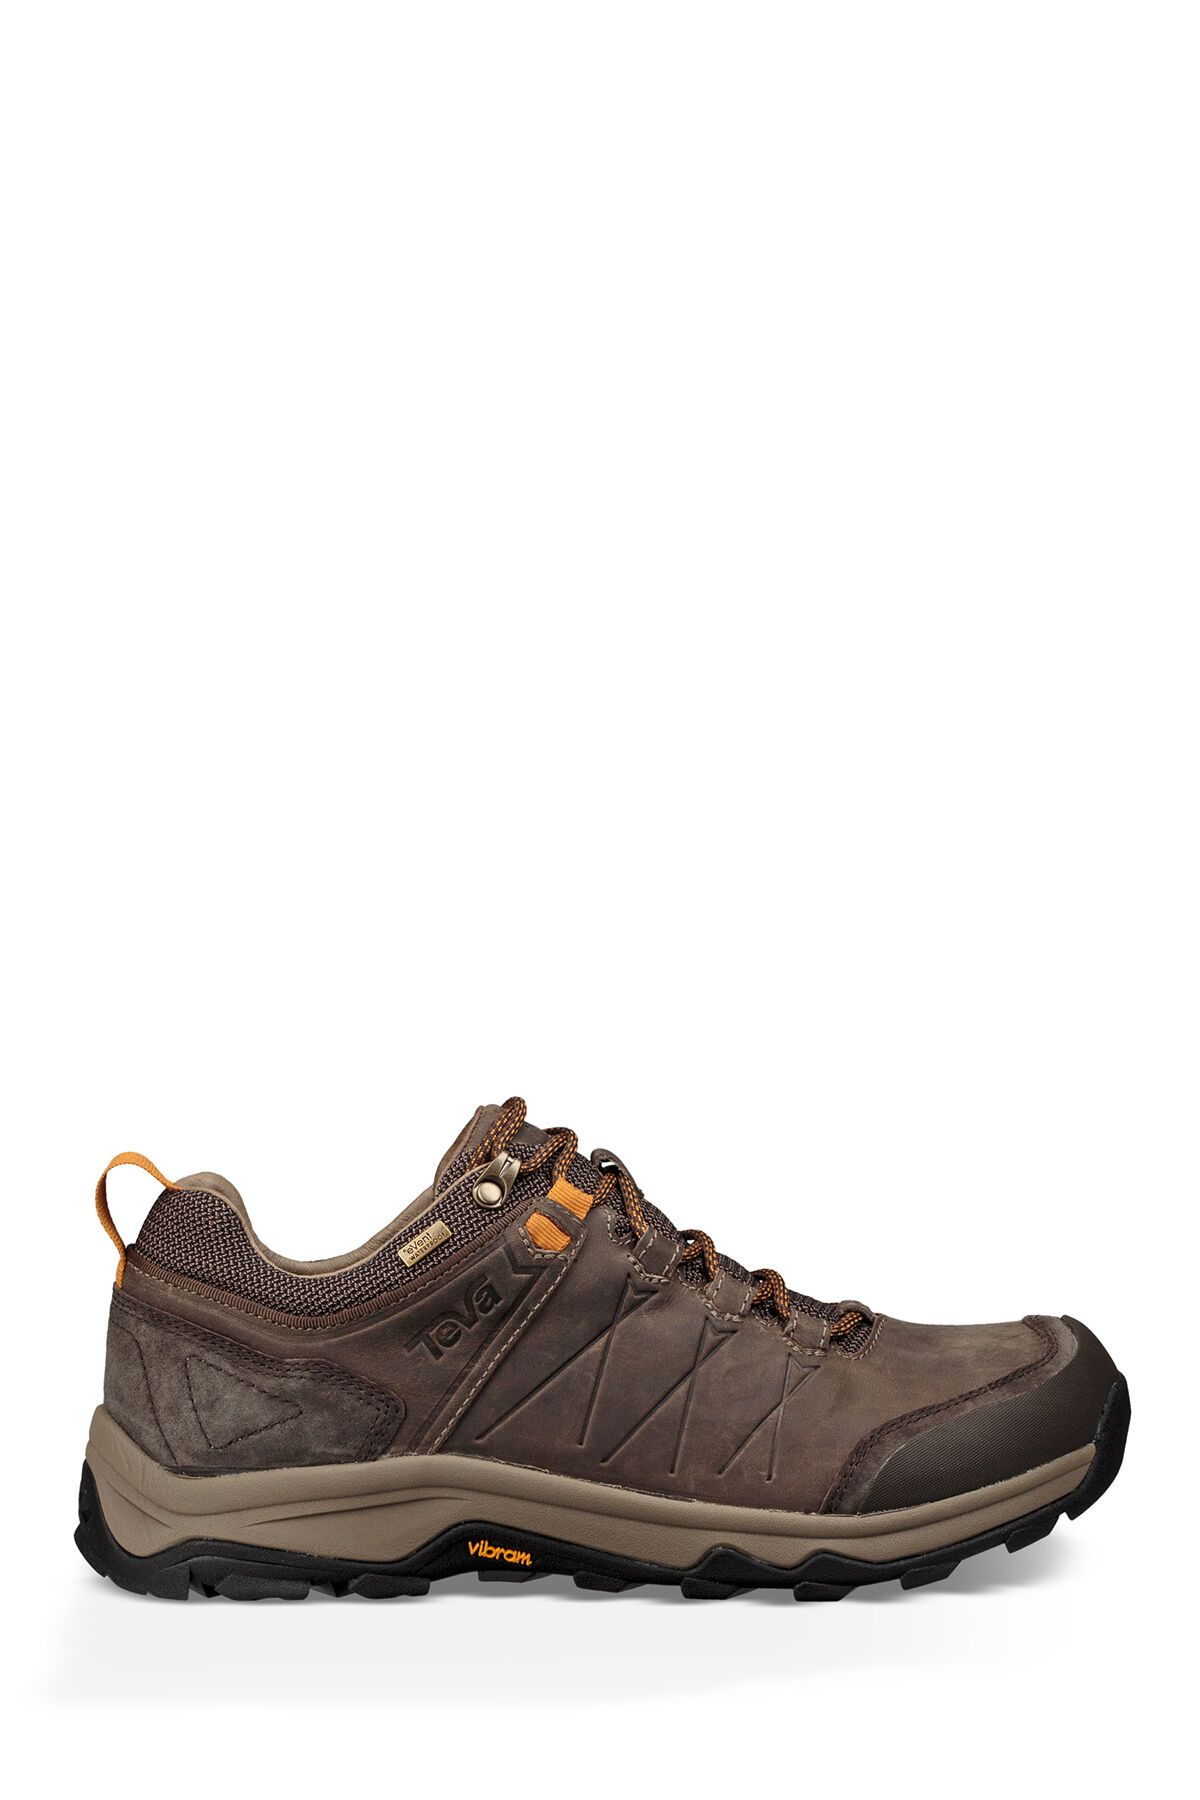 men's teva arrowood 2 waterproof trail shoes